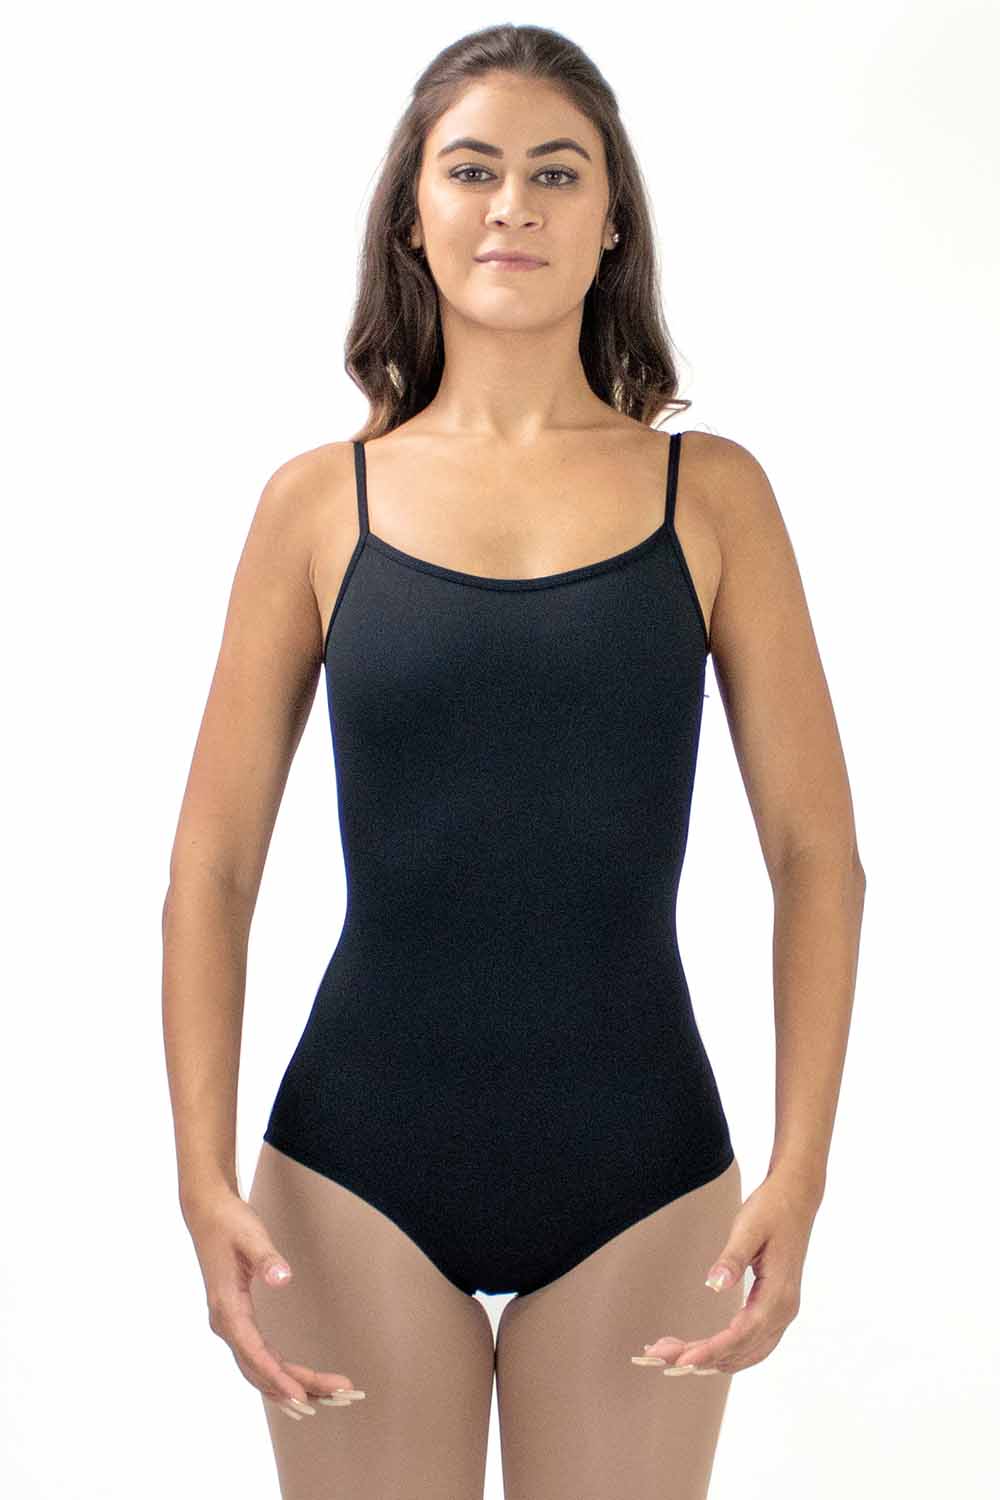 ON SALE Cami NYC Cooper black Bodysuit - women's leotard – Basicality